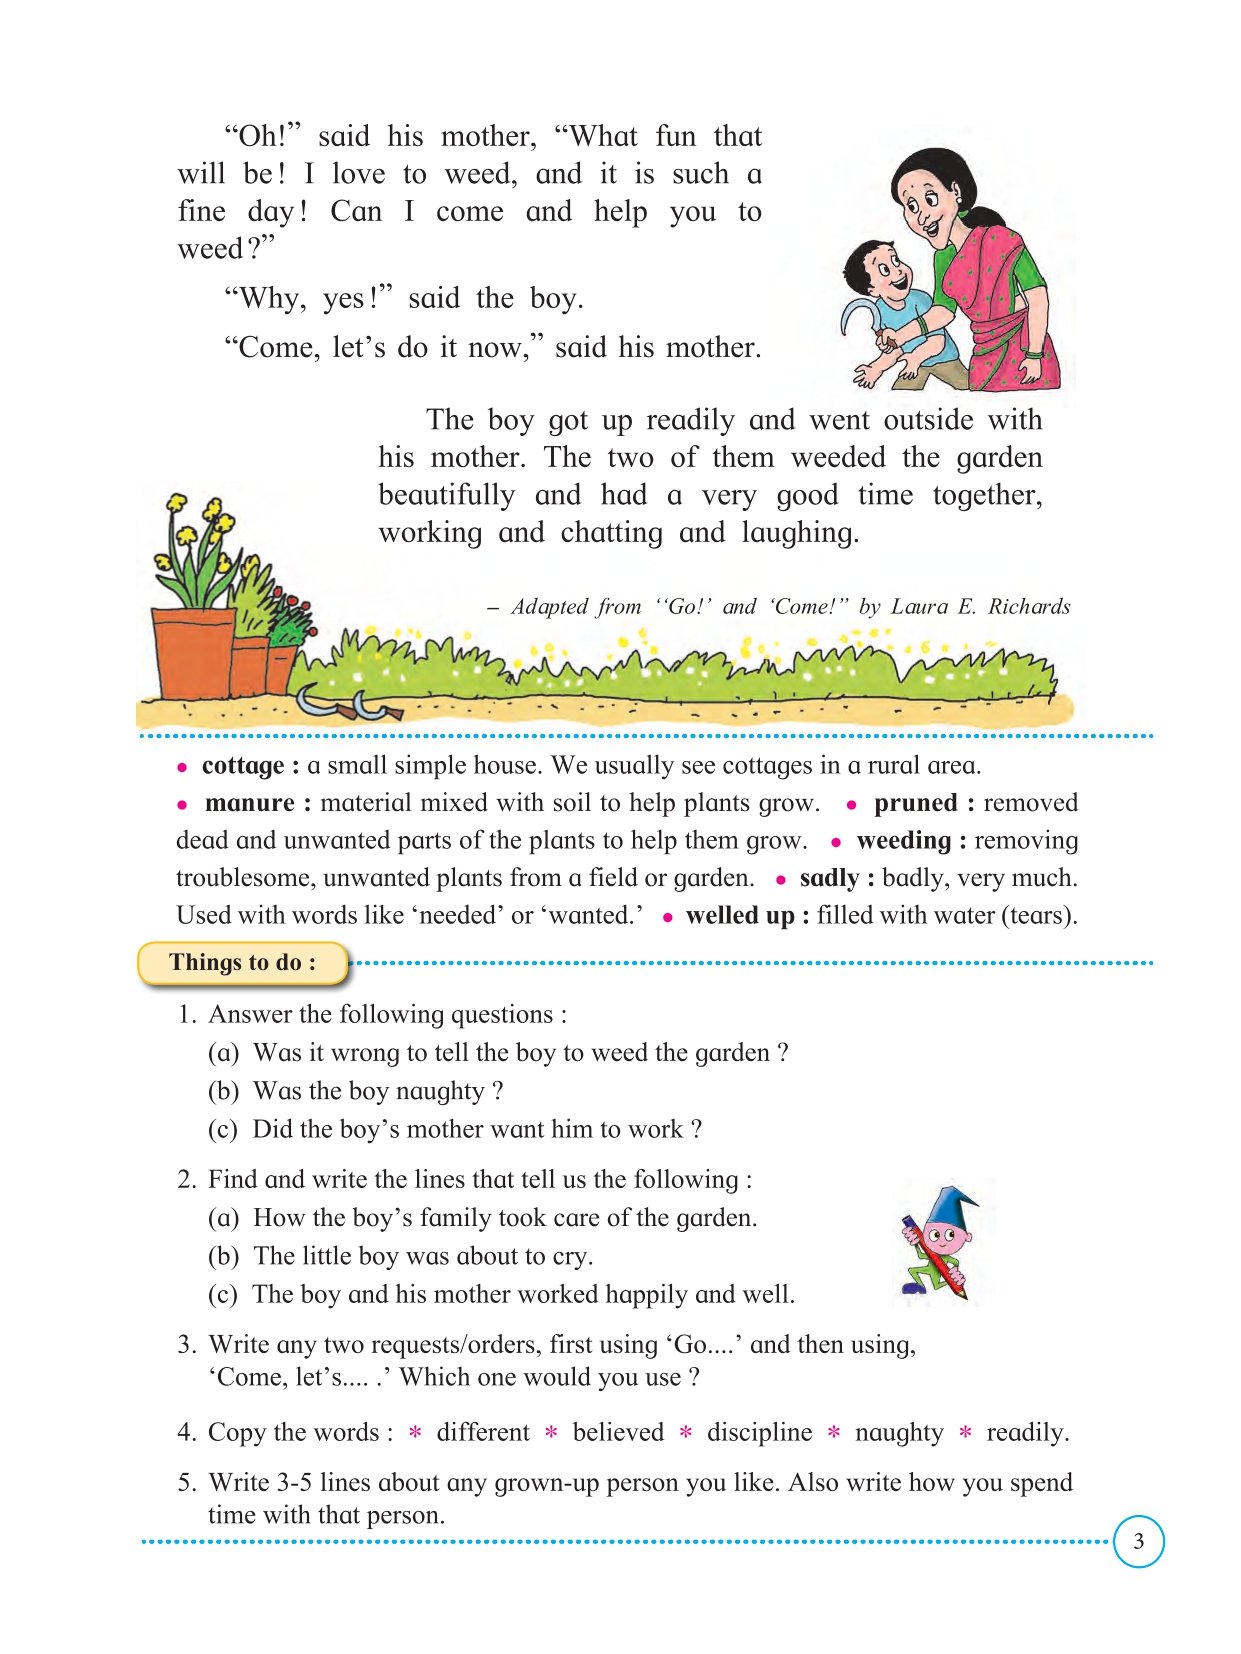 Maharashtra Board 3rd Standard English Book (PDF)